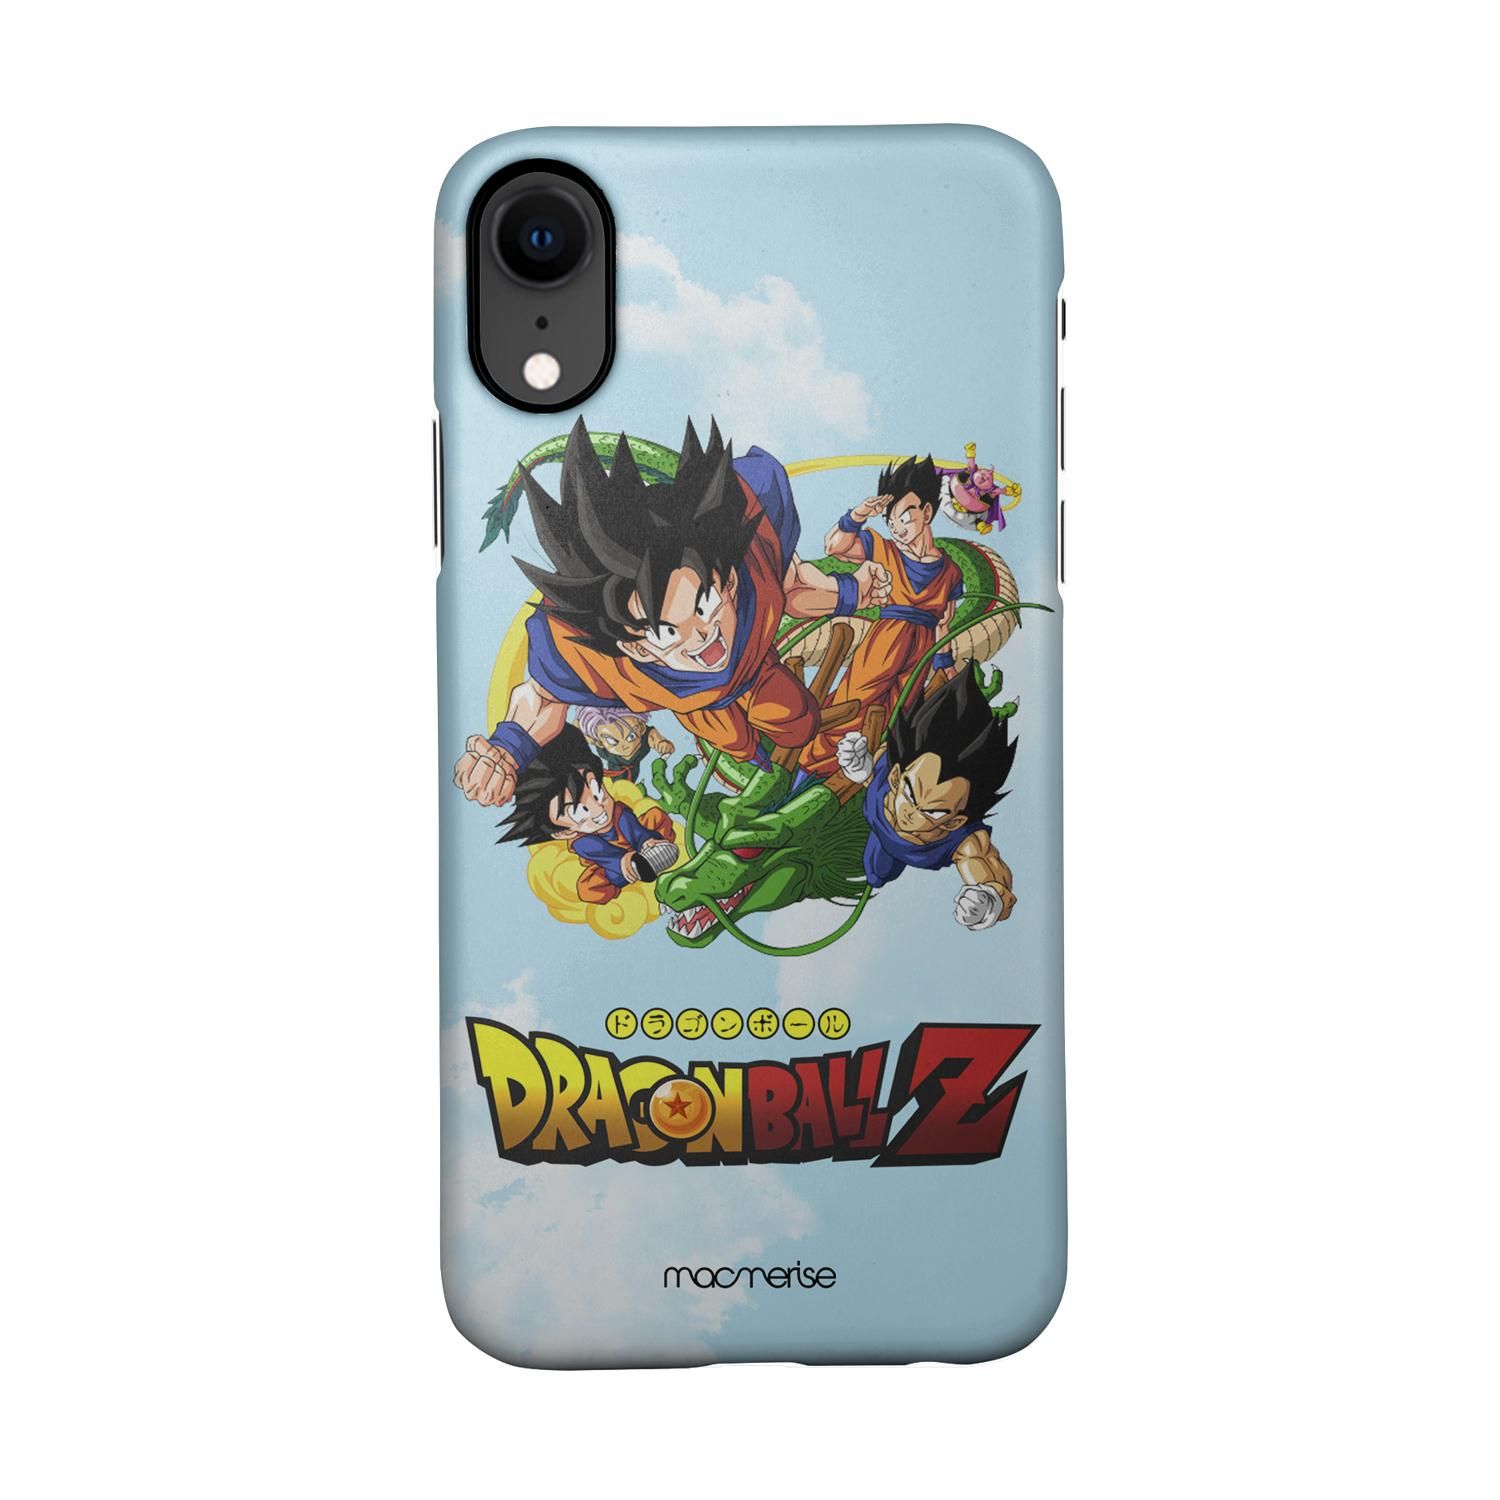 Buy Dragon ball Z - Sleek Phone Case for iPhone XR Online